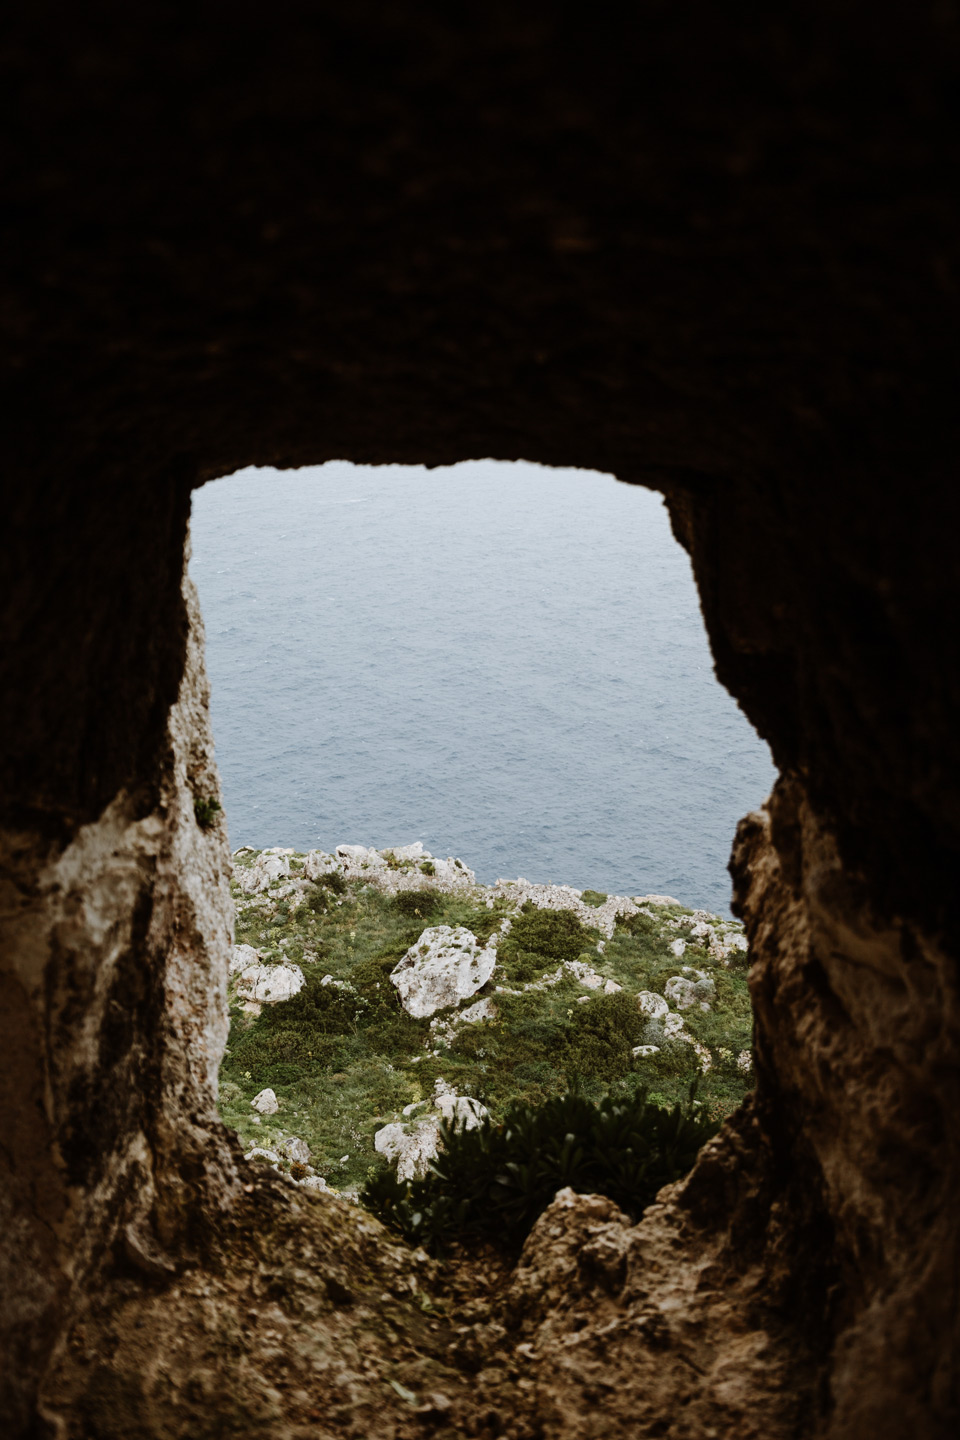 Malta, Dingli Cliffs, view point